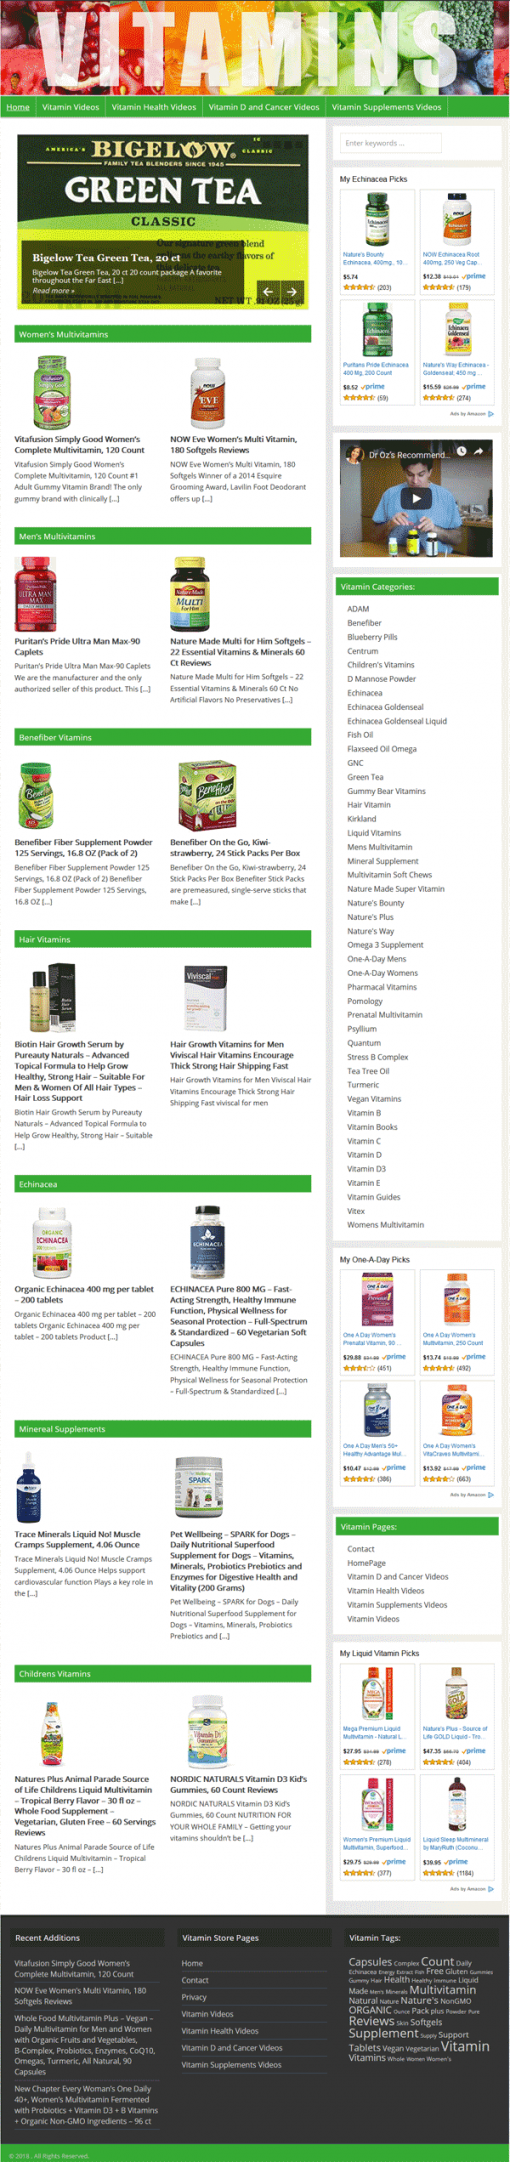 Vitamin PLR Amazon Store Website